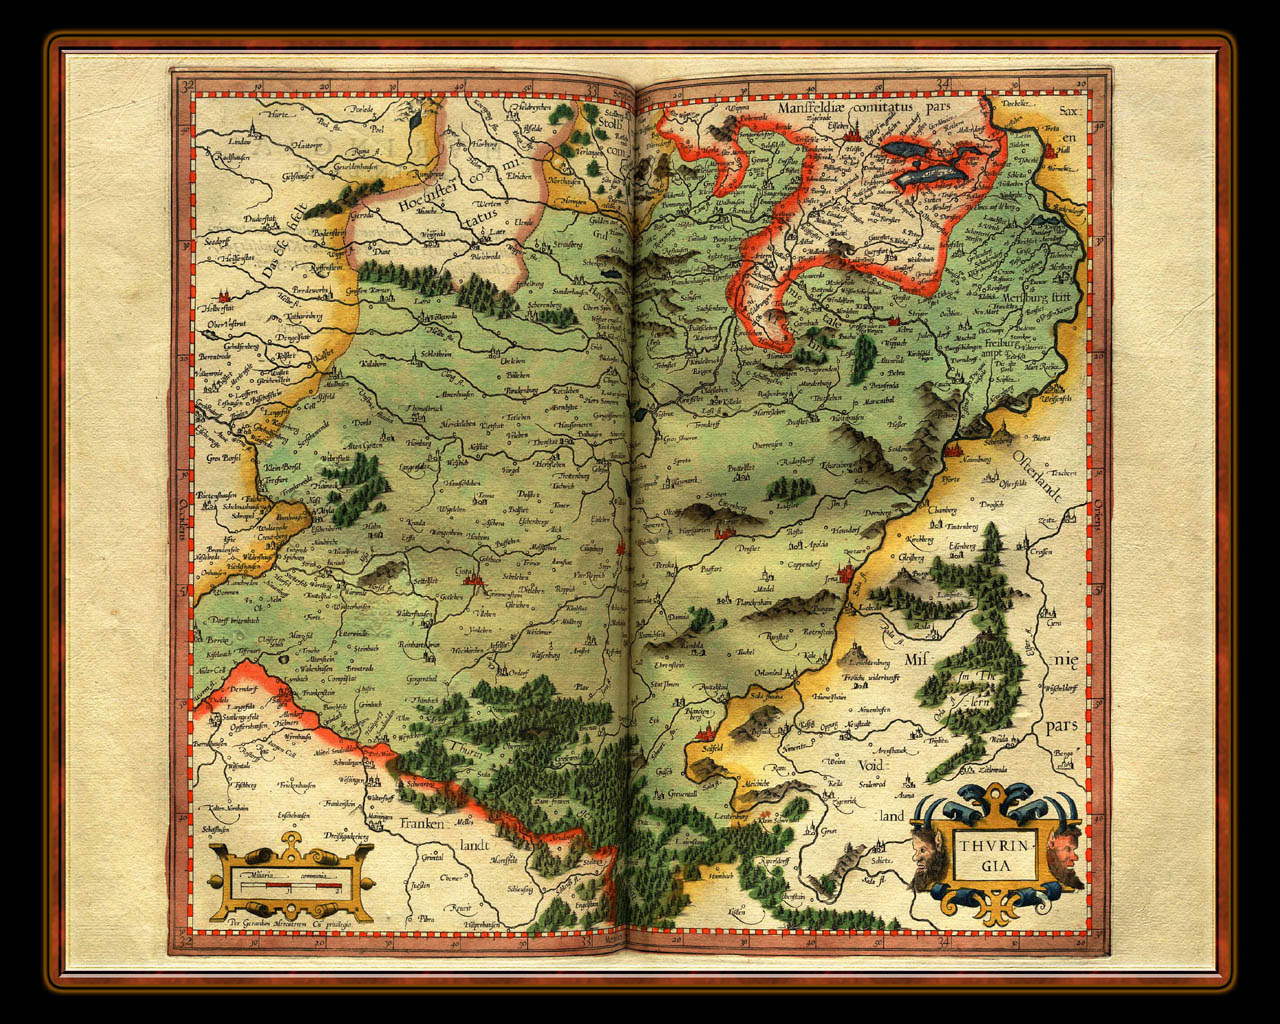 "Gerhard Mercator 1595 World Atlas - Cosmographicae" - Wallpaper No. 34 of 106. Right click for saving options.